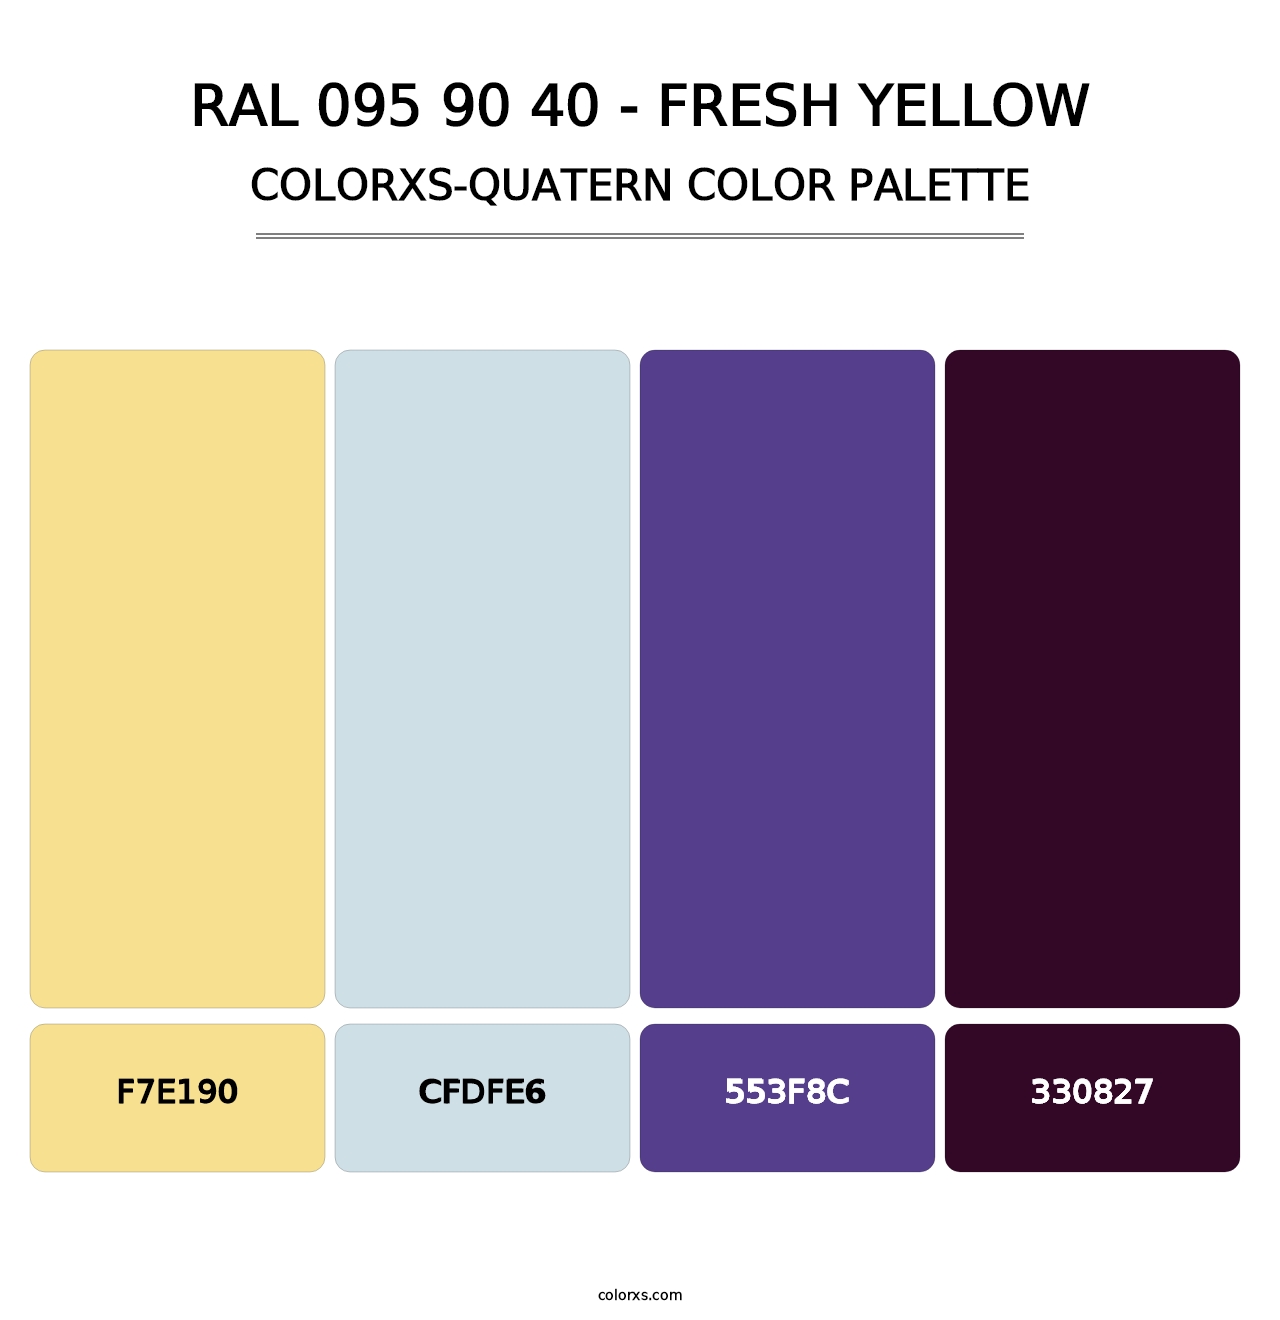 RAL 095 90 40 - Fresh Yellow - Colorxs Quatern Palette